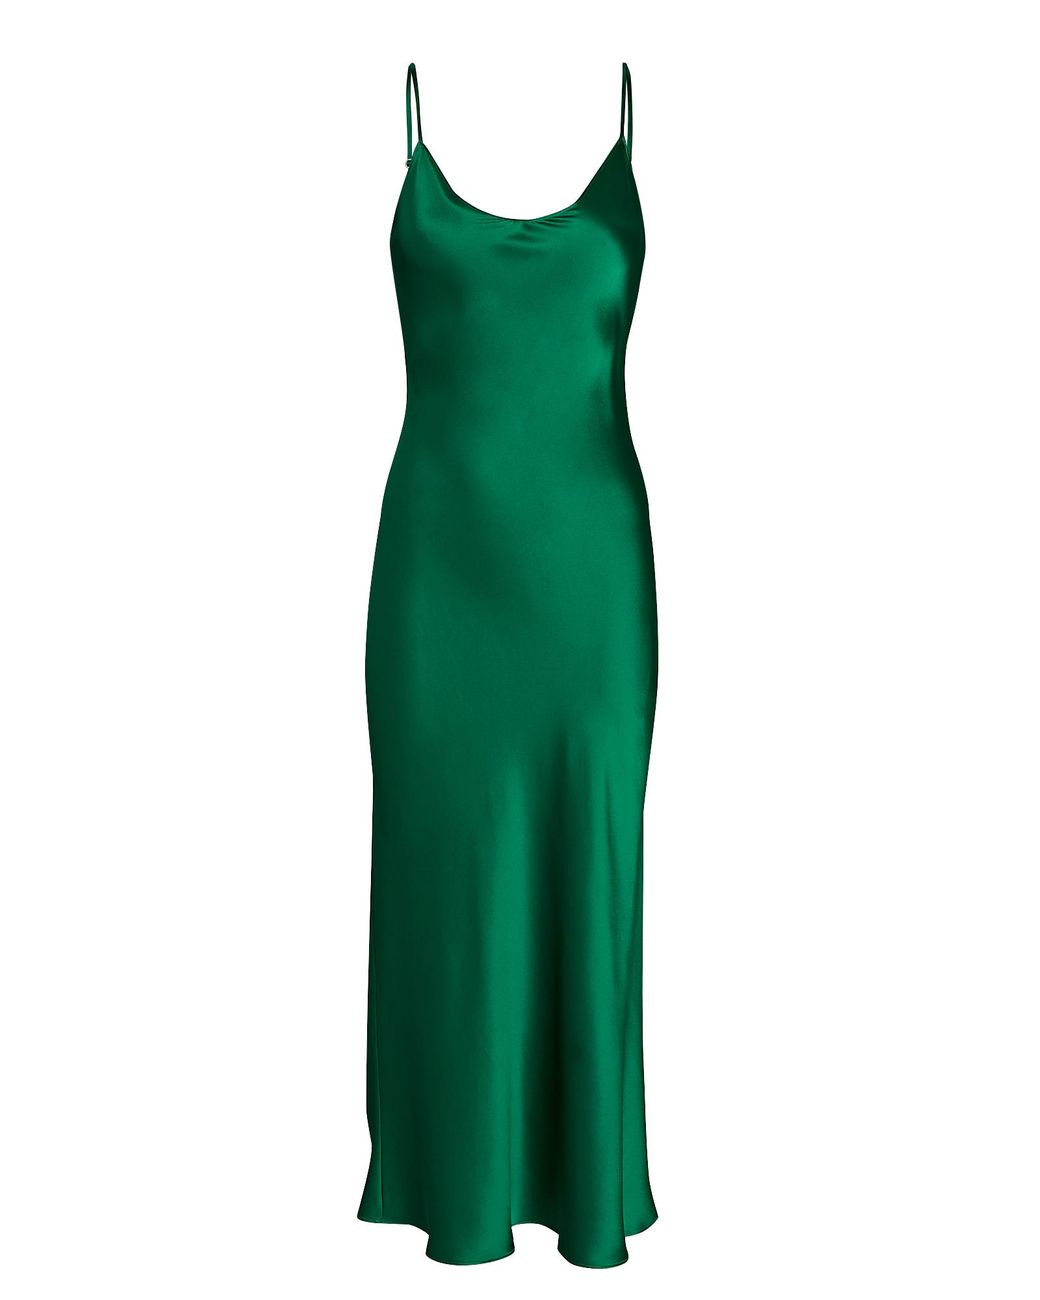 SABLYN Taylor Silk Slip Dress in Green | Lyst